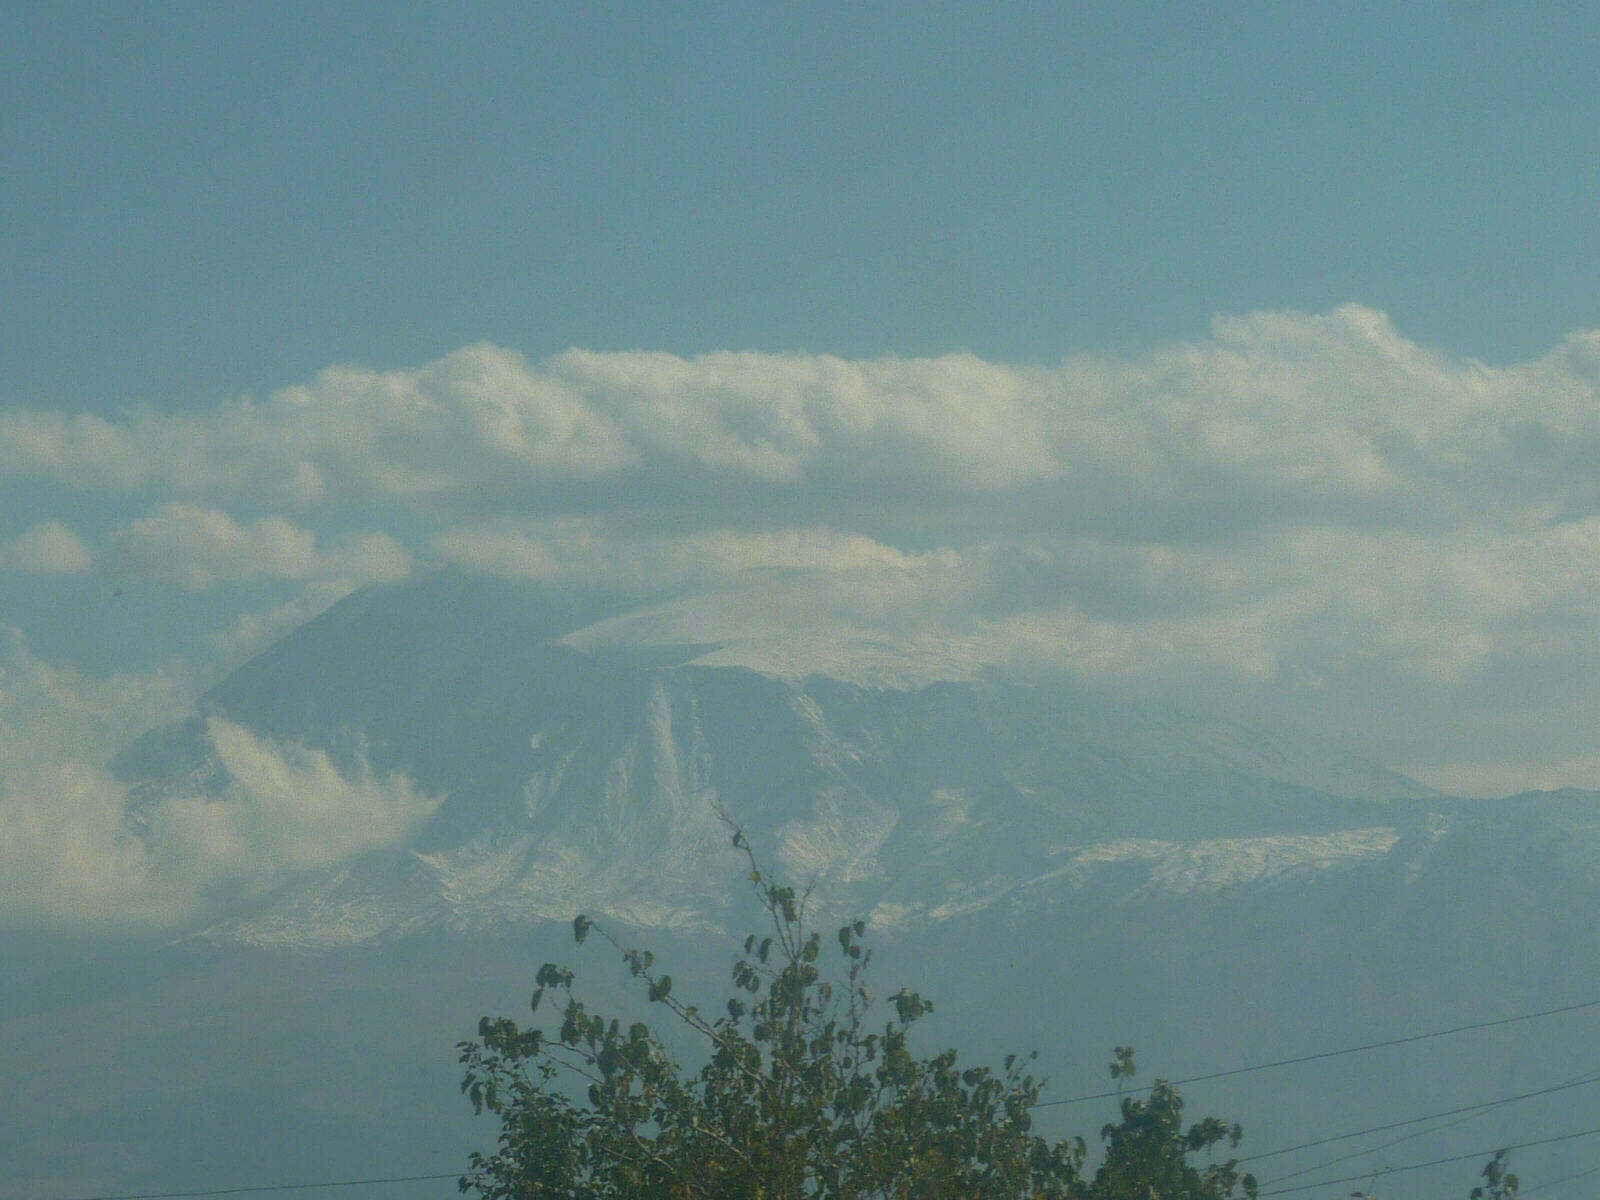 Mount Ararat seen from the train in Armenia